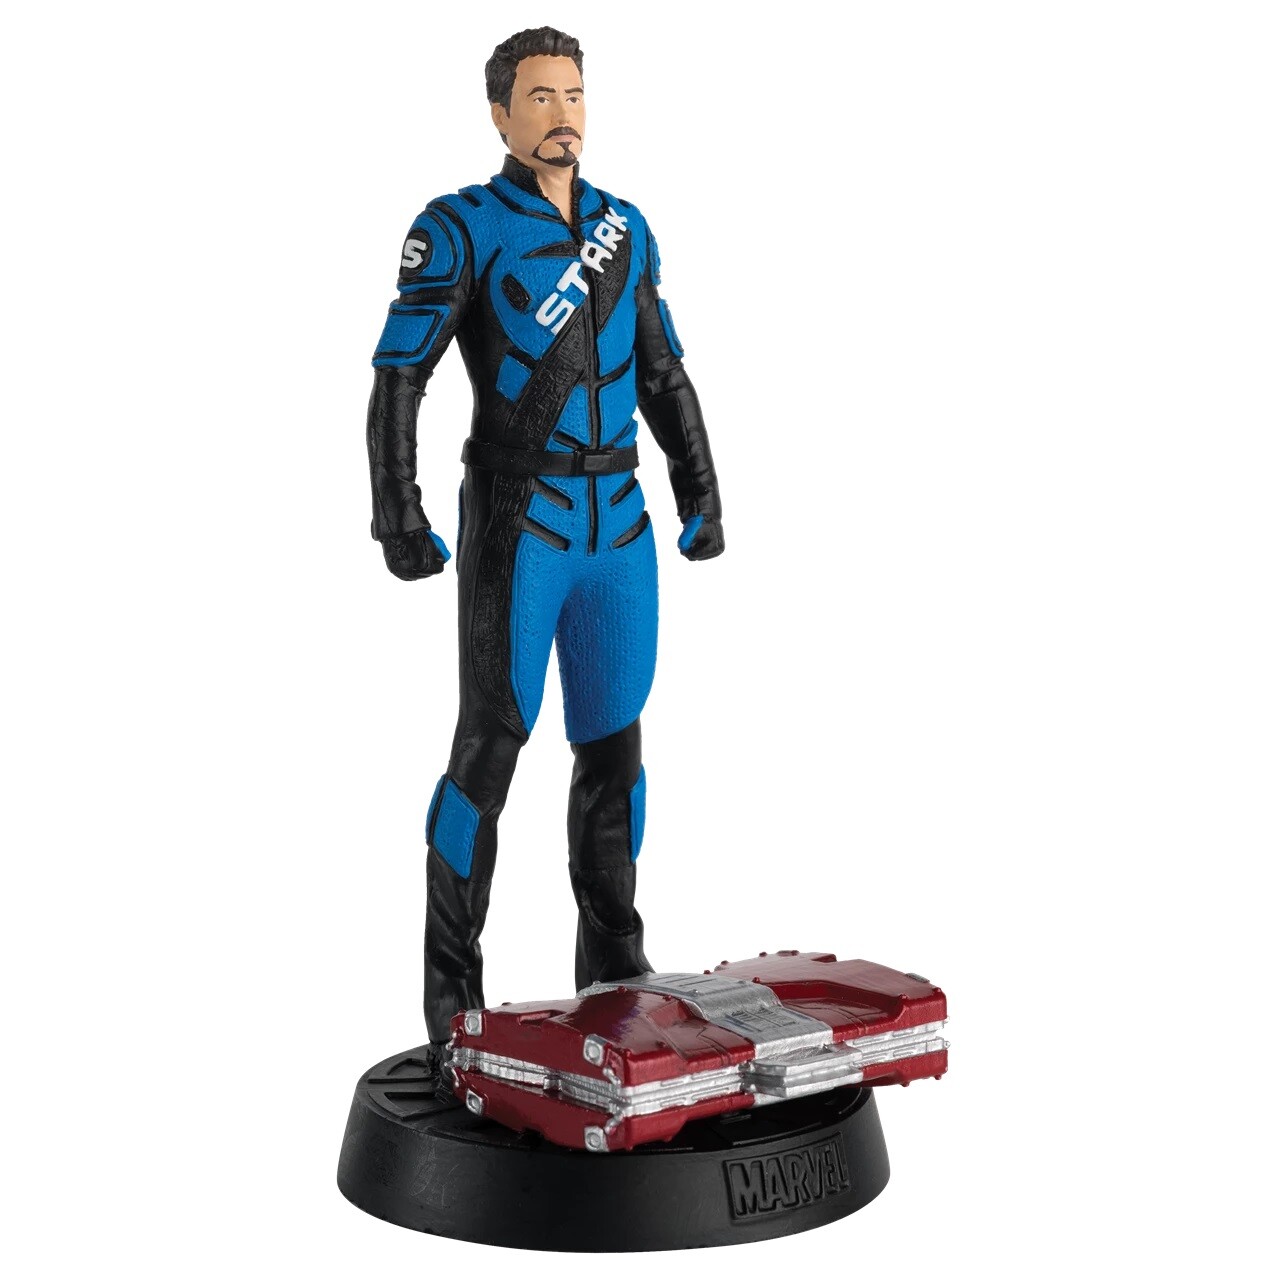 Figurine Marvel - Tony Stark (Iron Man) | Tips for original gifts